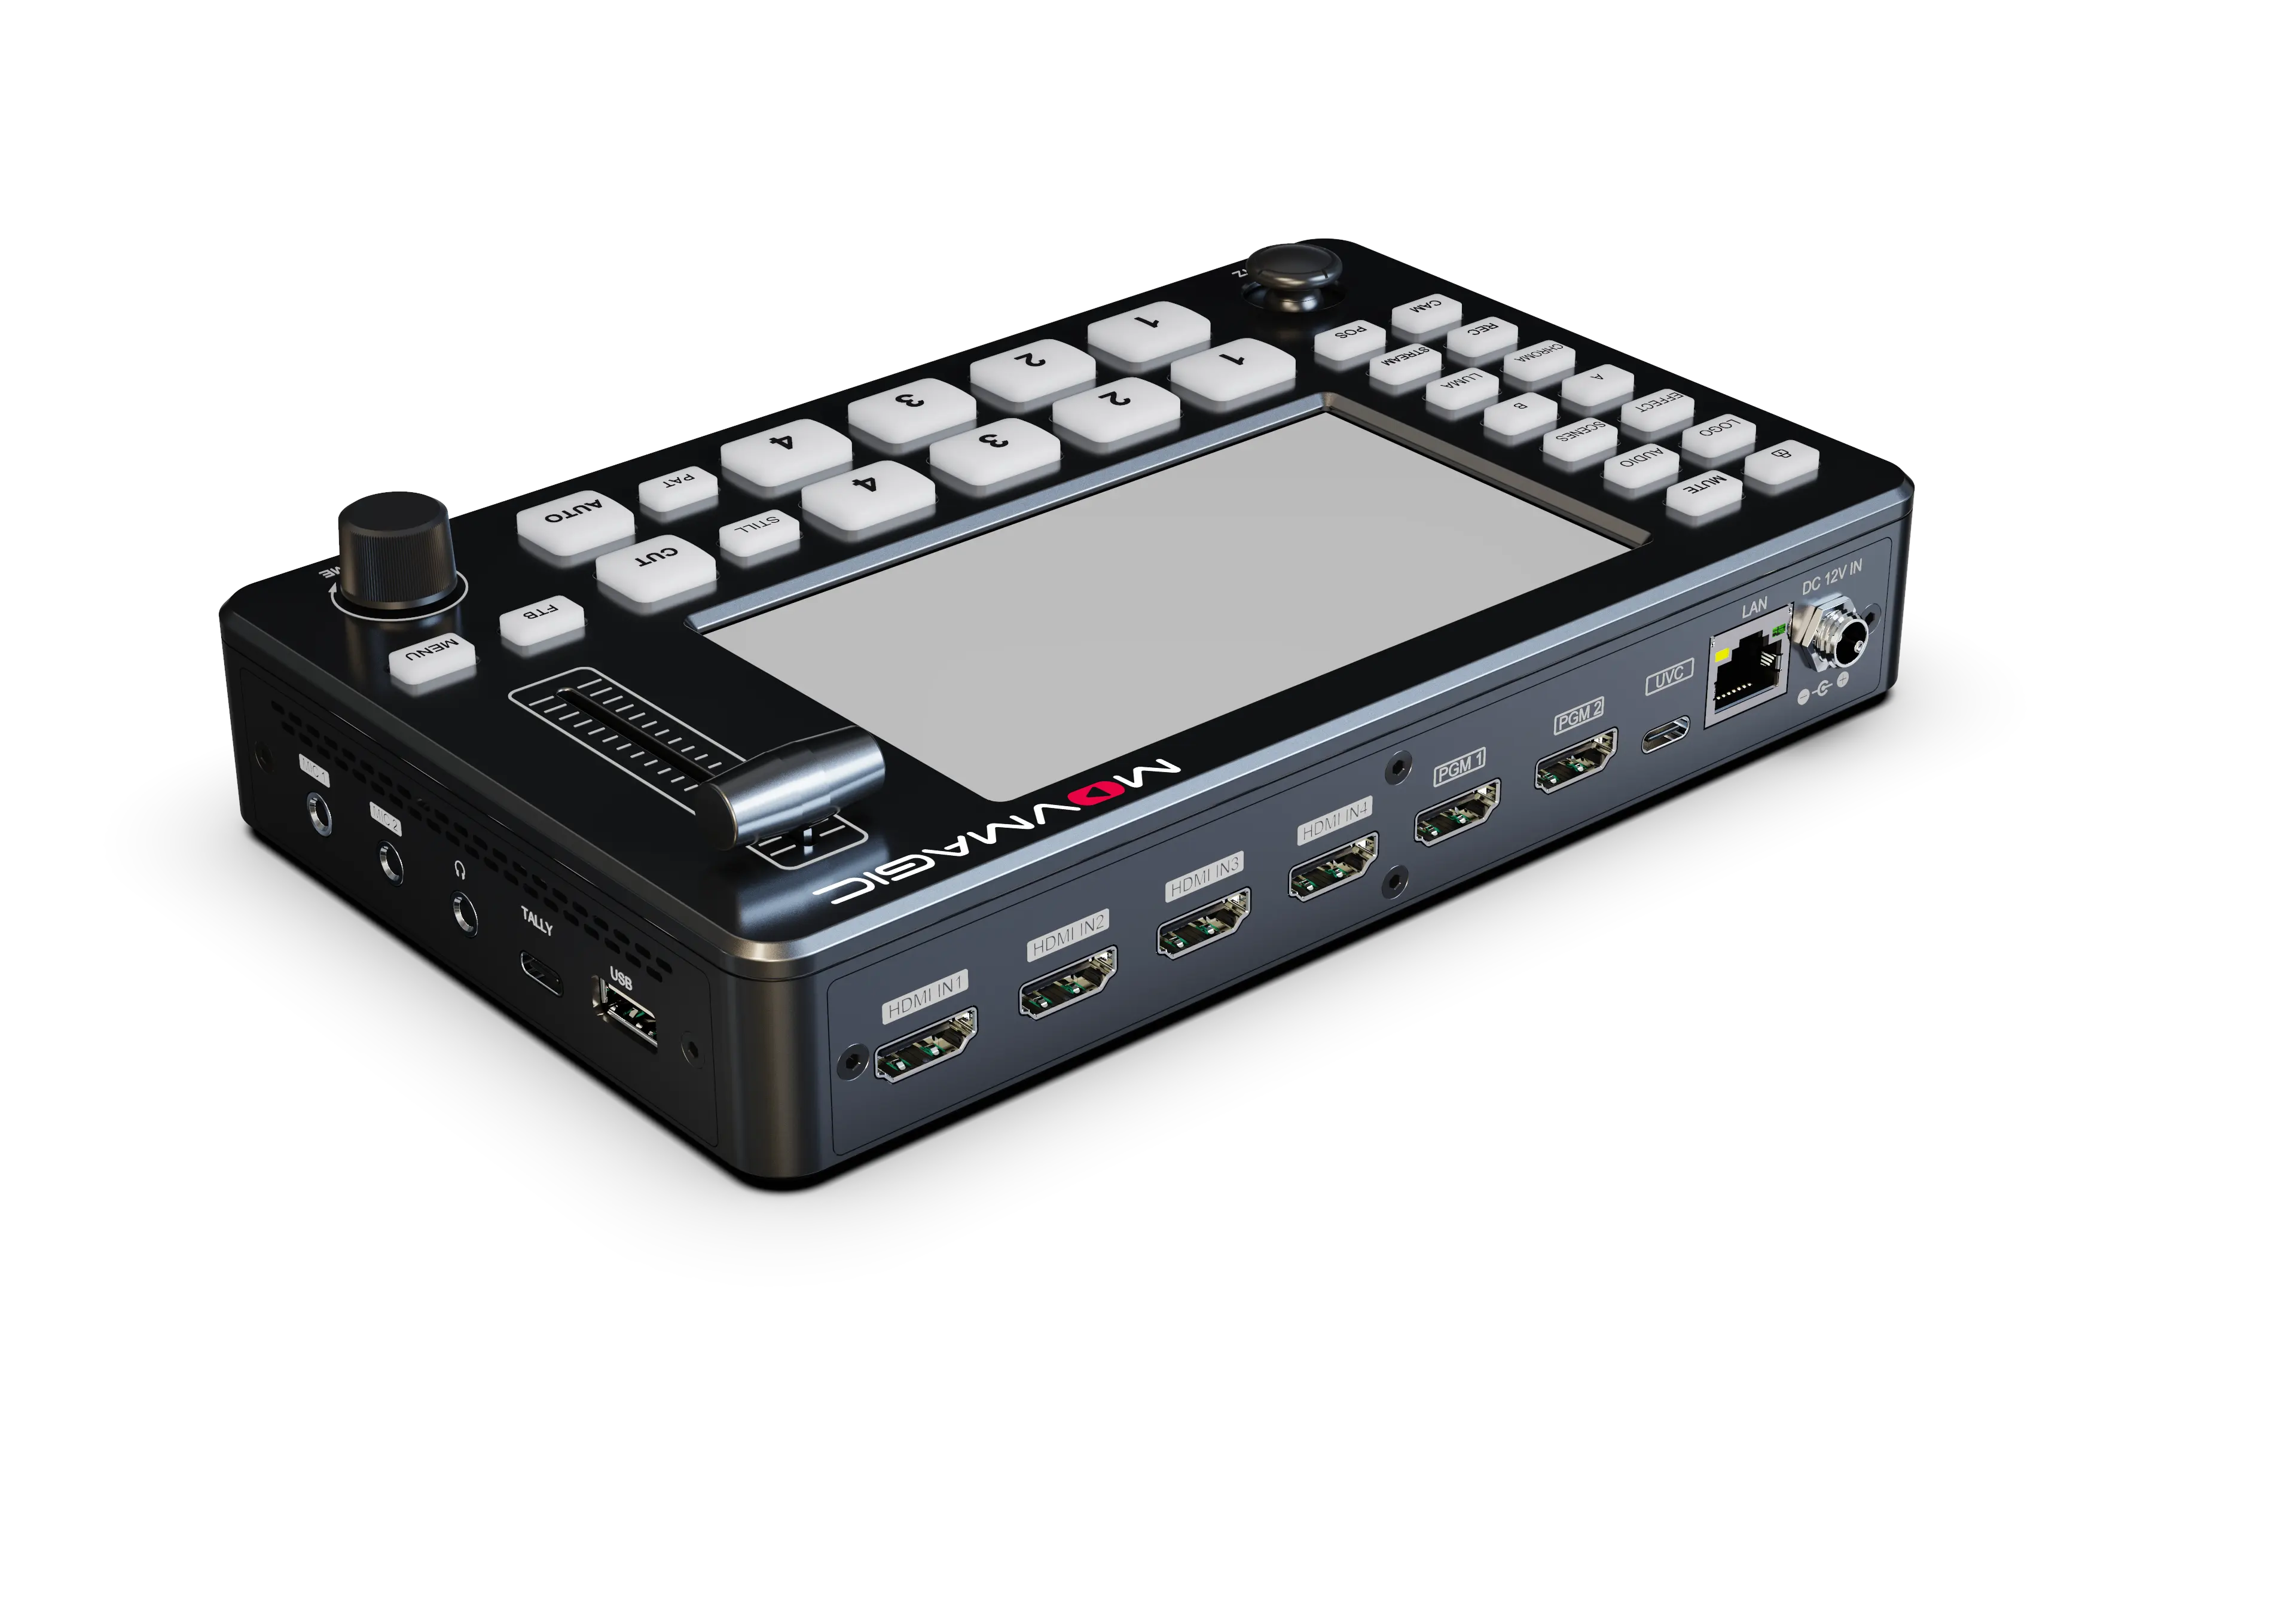 Movmagic multi camera 4k input video switcher live streaming broadcast joystick control studio mixer video camera switcher